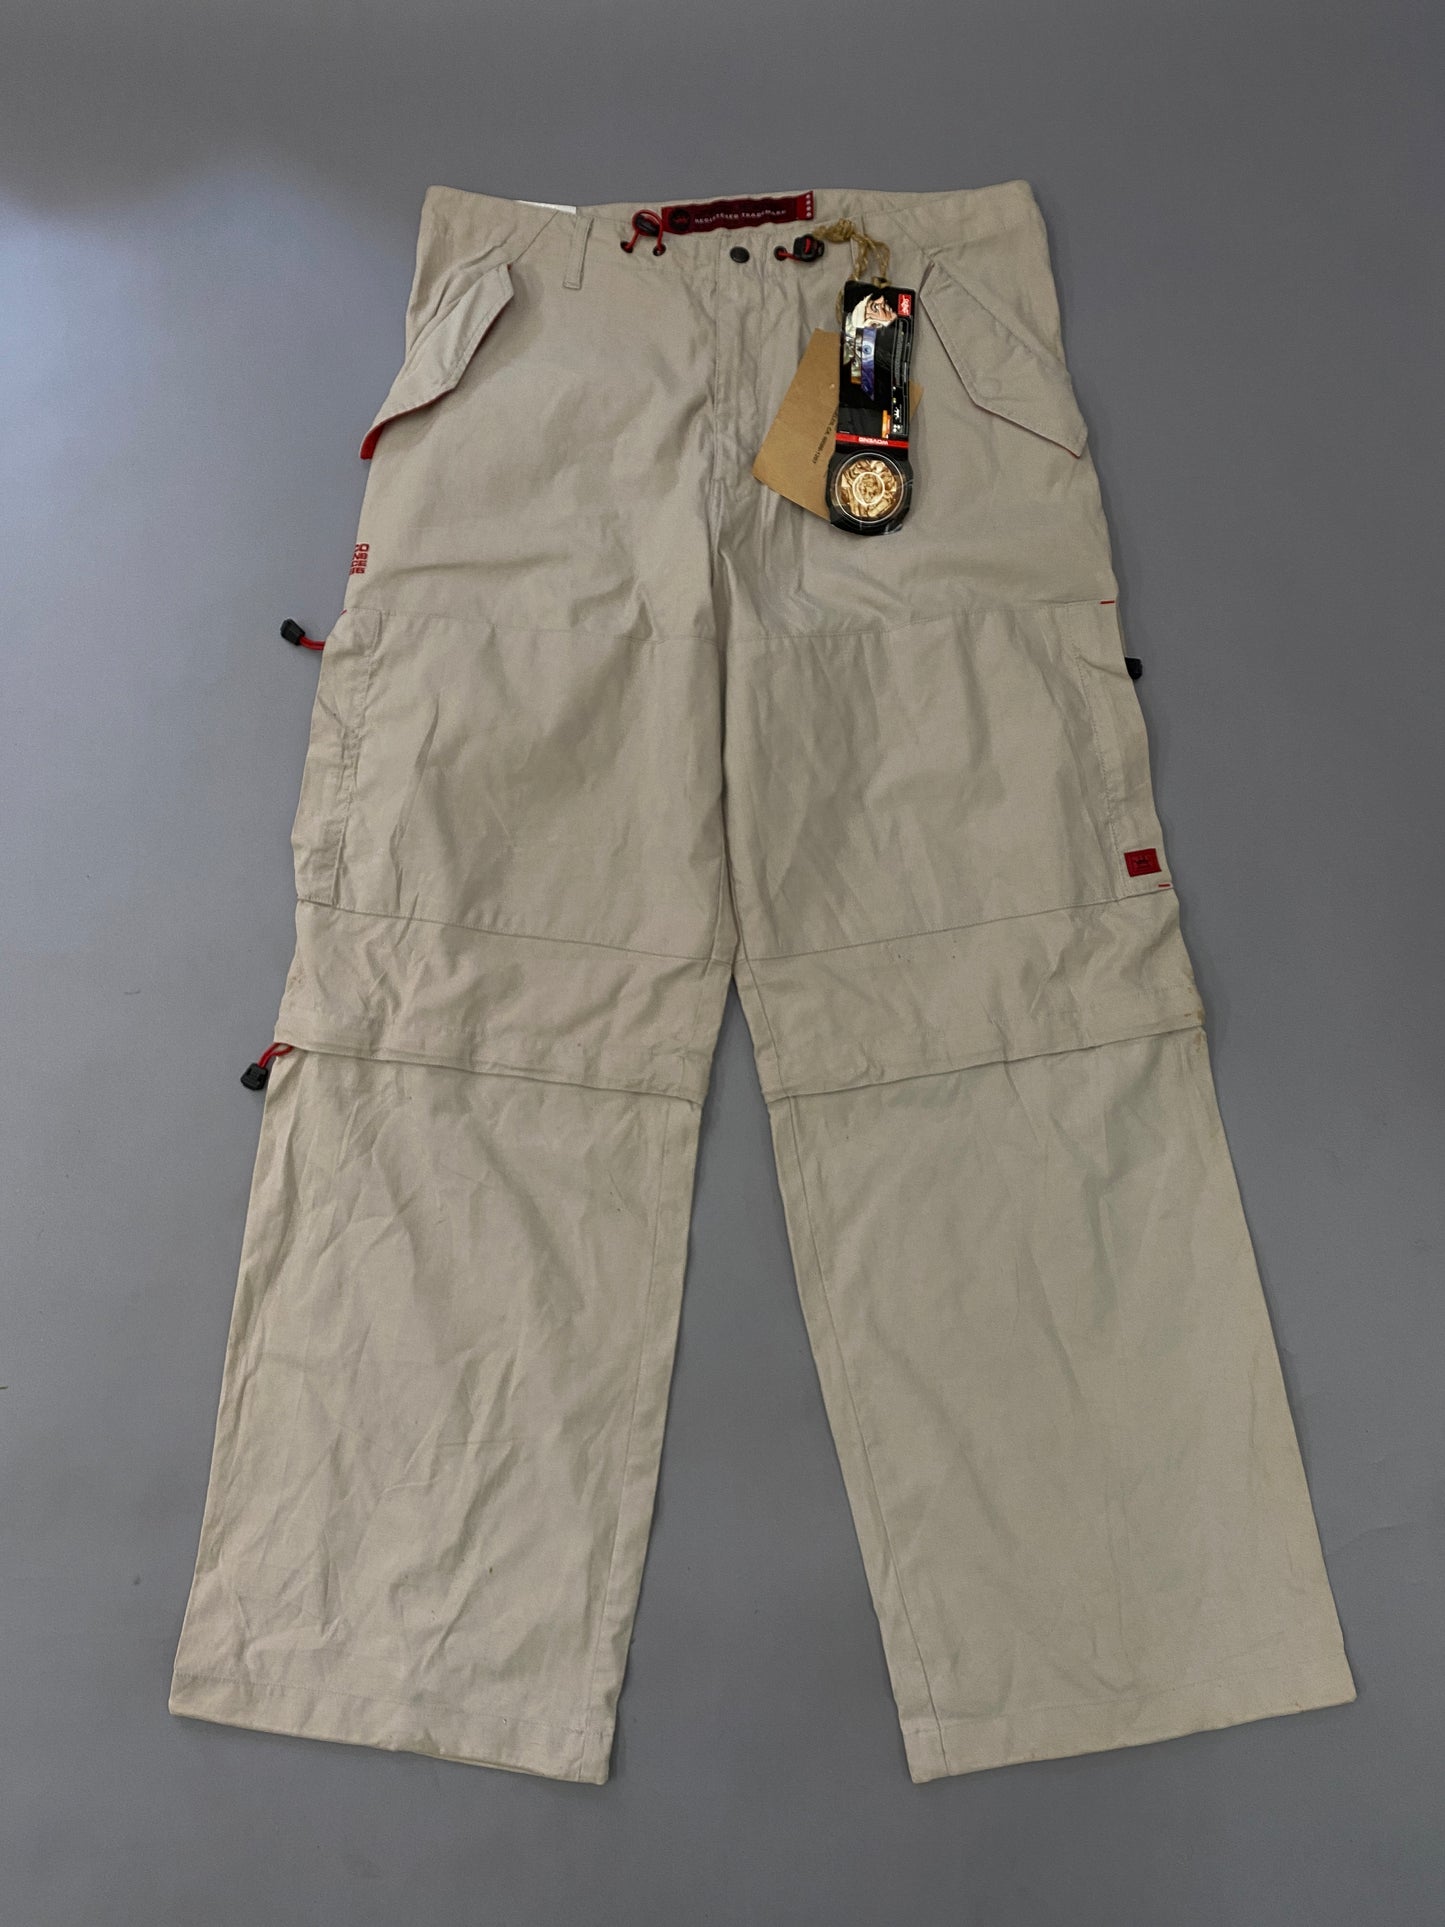 JNCO Jeans Vintage Cargo - 38 x 32